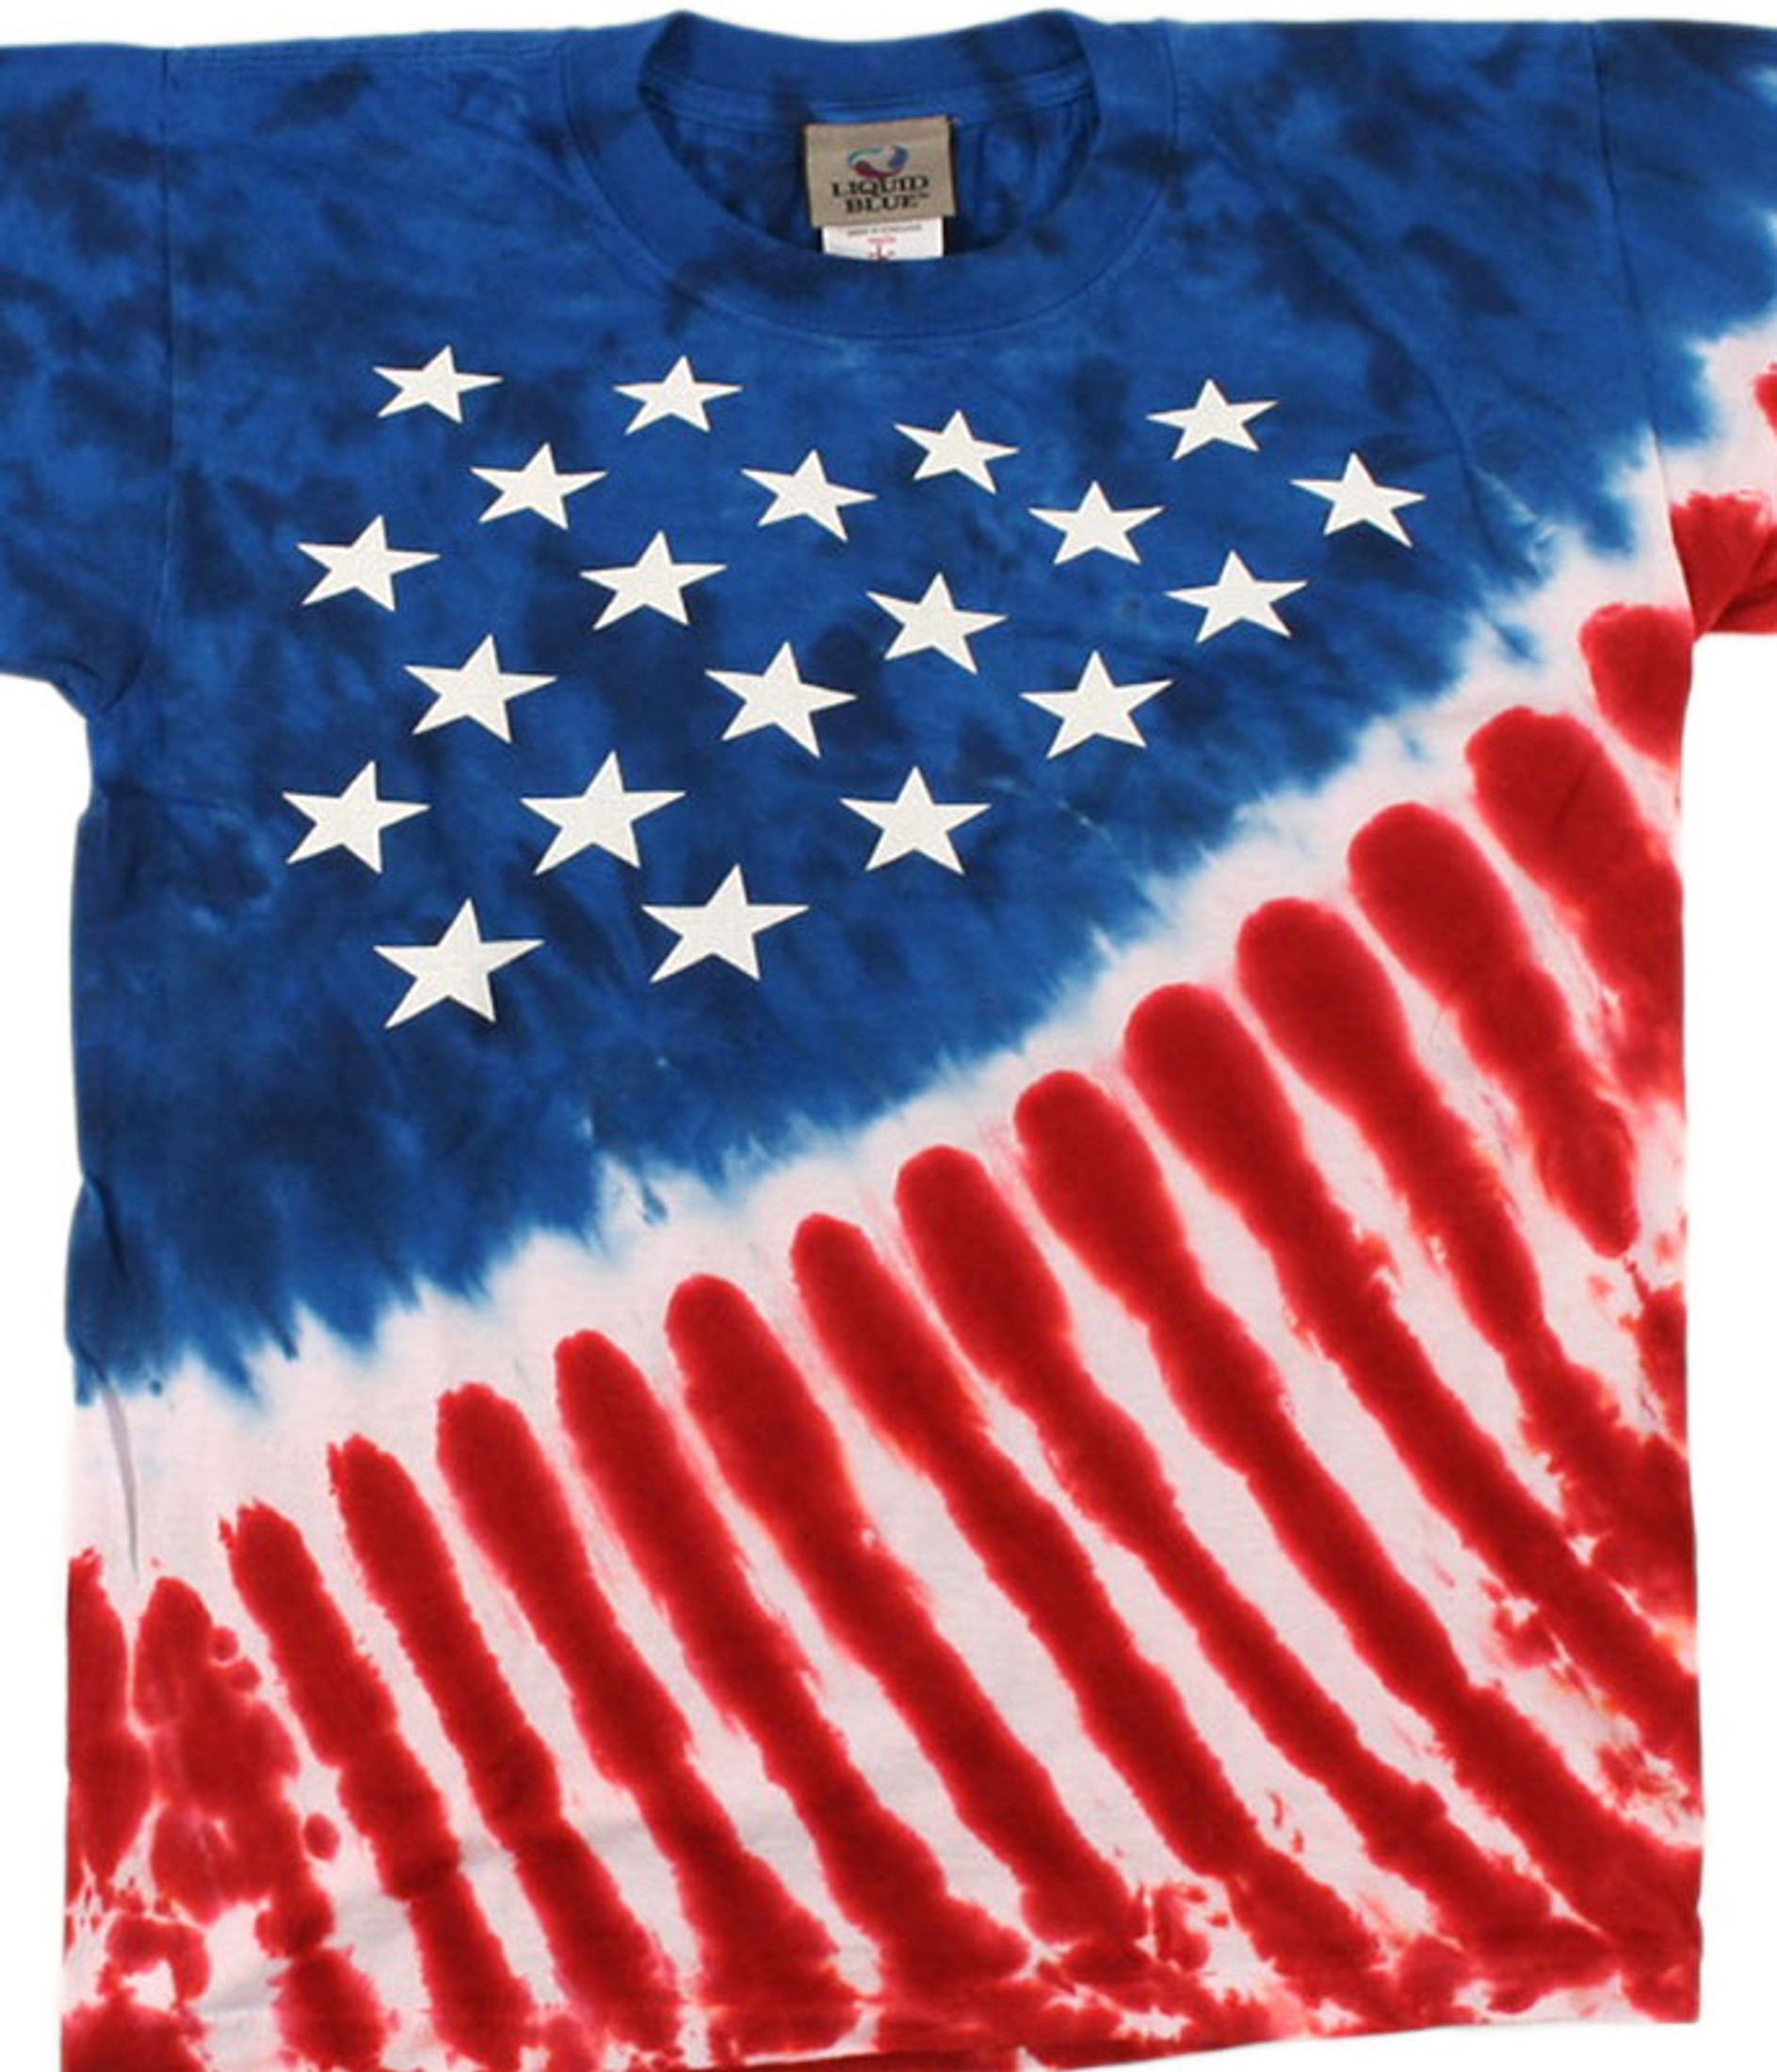 4th of July Spiral Patriotic Bears Tie-Dye T-Shirt Tee Liquid Blue